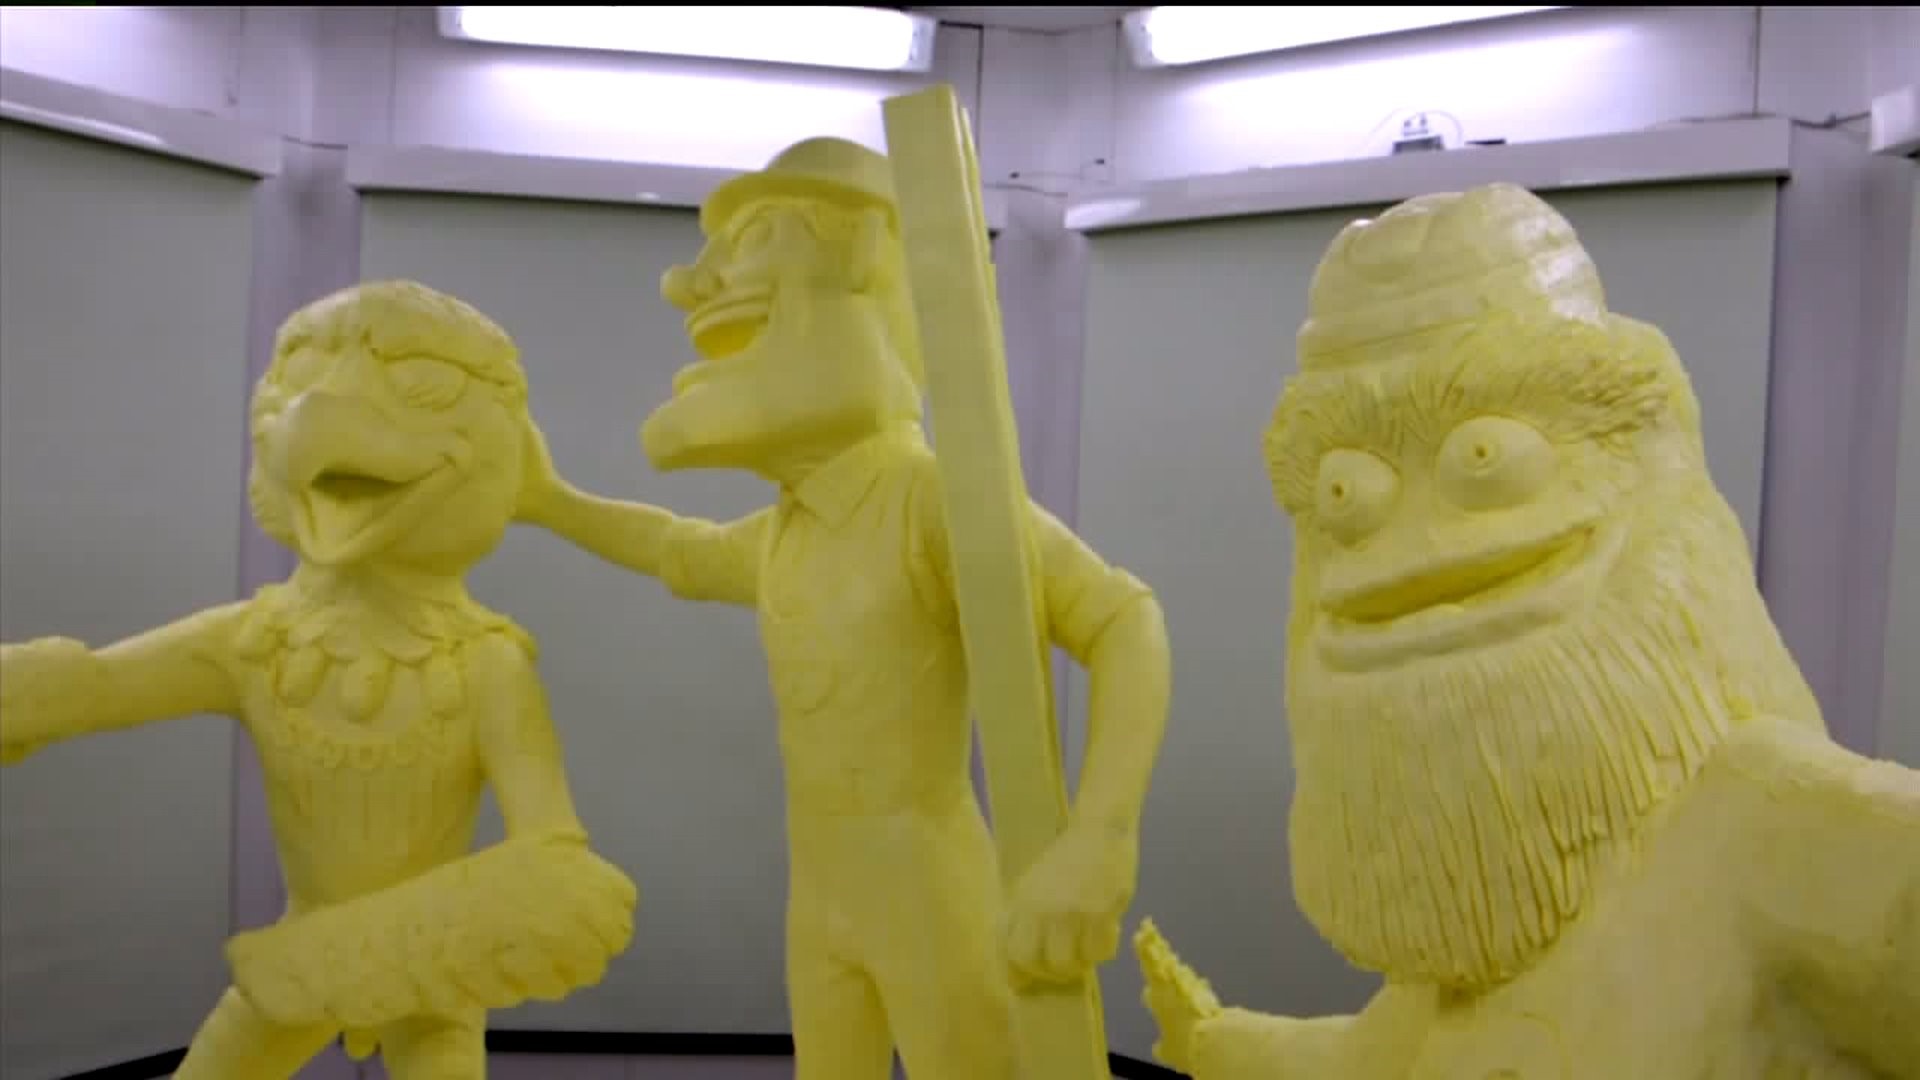 Pennsylvania Farm Show Butter Sculpture Features State Sports Mascots